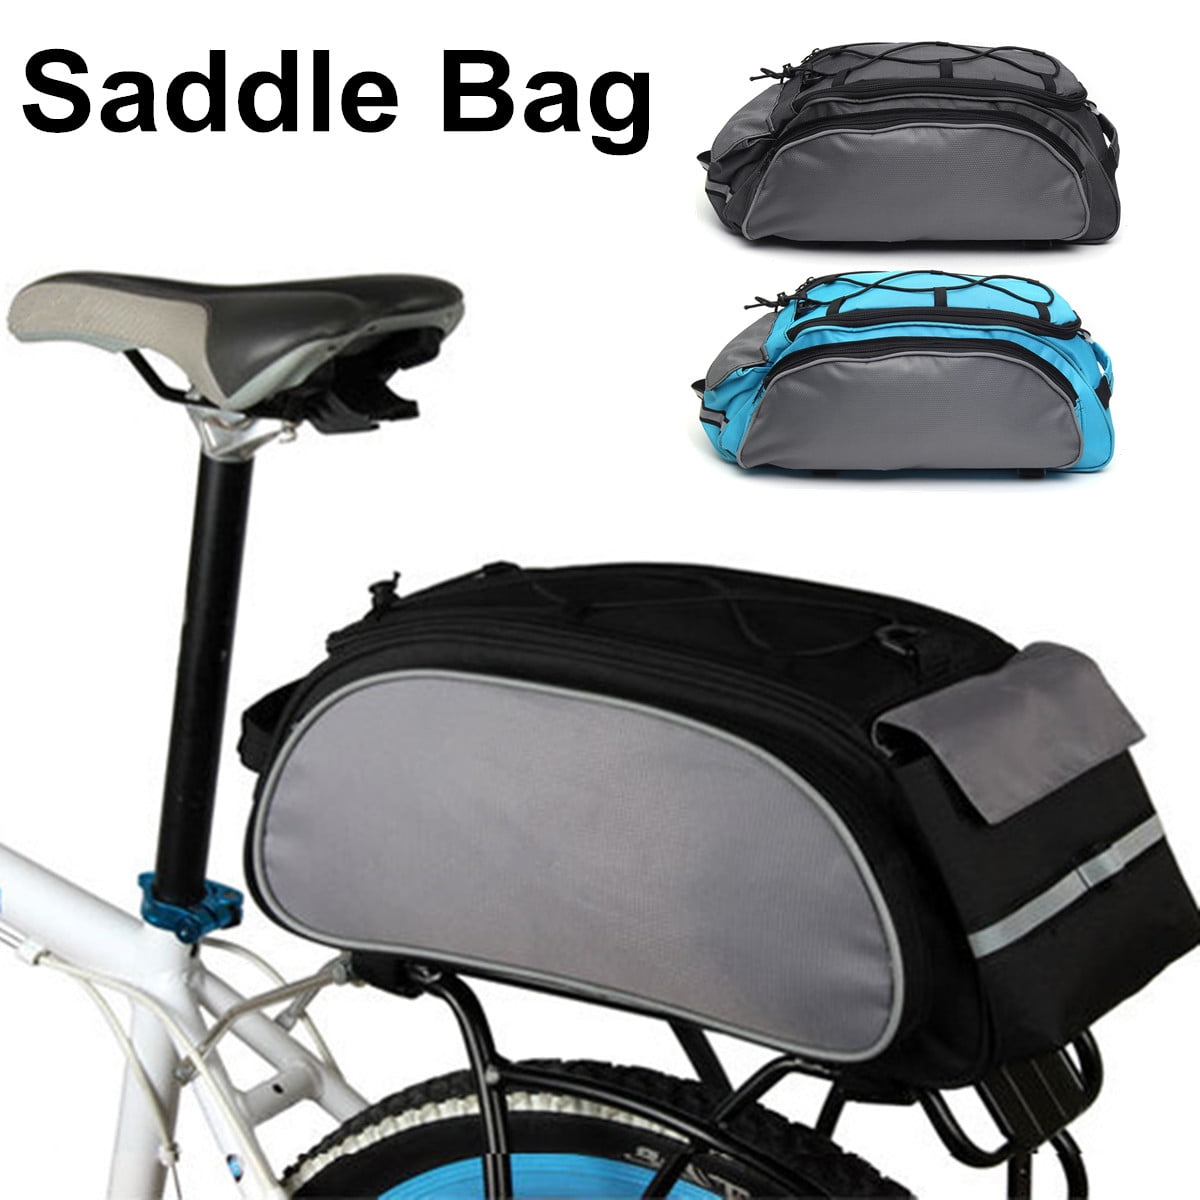 Bicycle bag station wagon backseat mountain bike equipment bag portable tail bag 